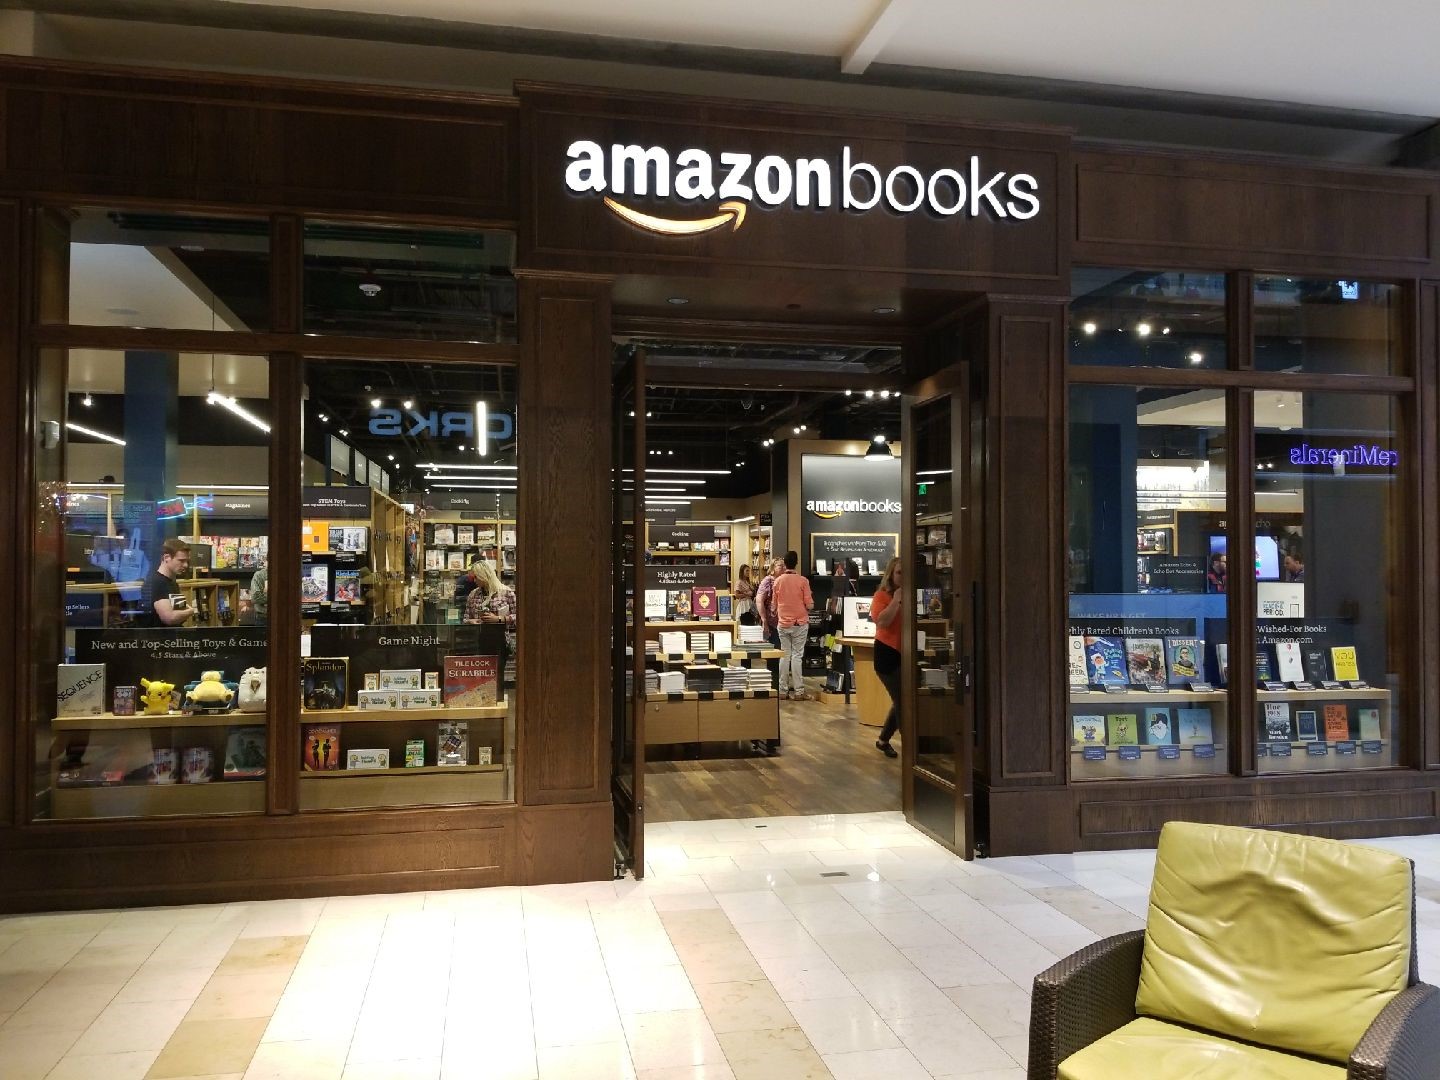 Amazon Announces Closure of Retail Locations, Amazon Books at Bellevue Square to Close